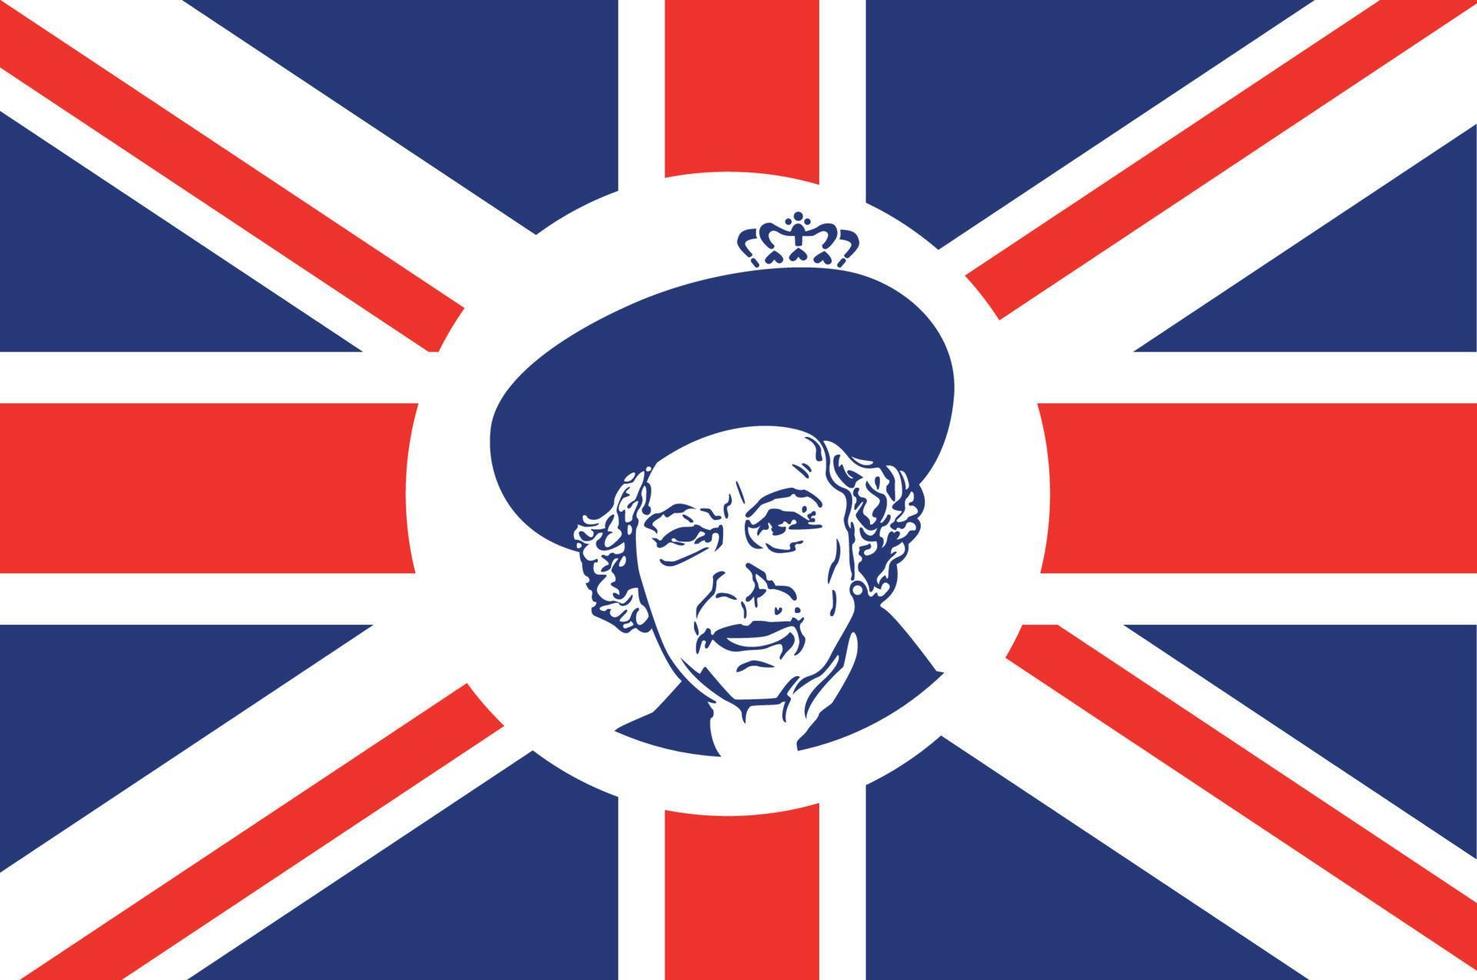 Queen Elizabeth Face Portrait Blue With British United Kingdom Flag National Europe Emblem Symbol Icon Vector Illustration Abstract Design Element